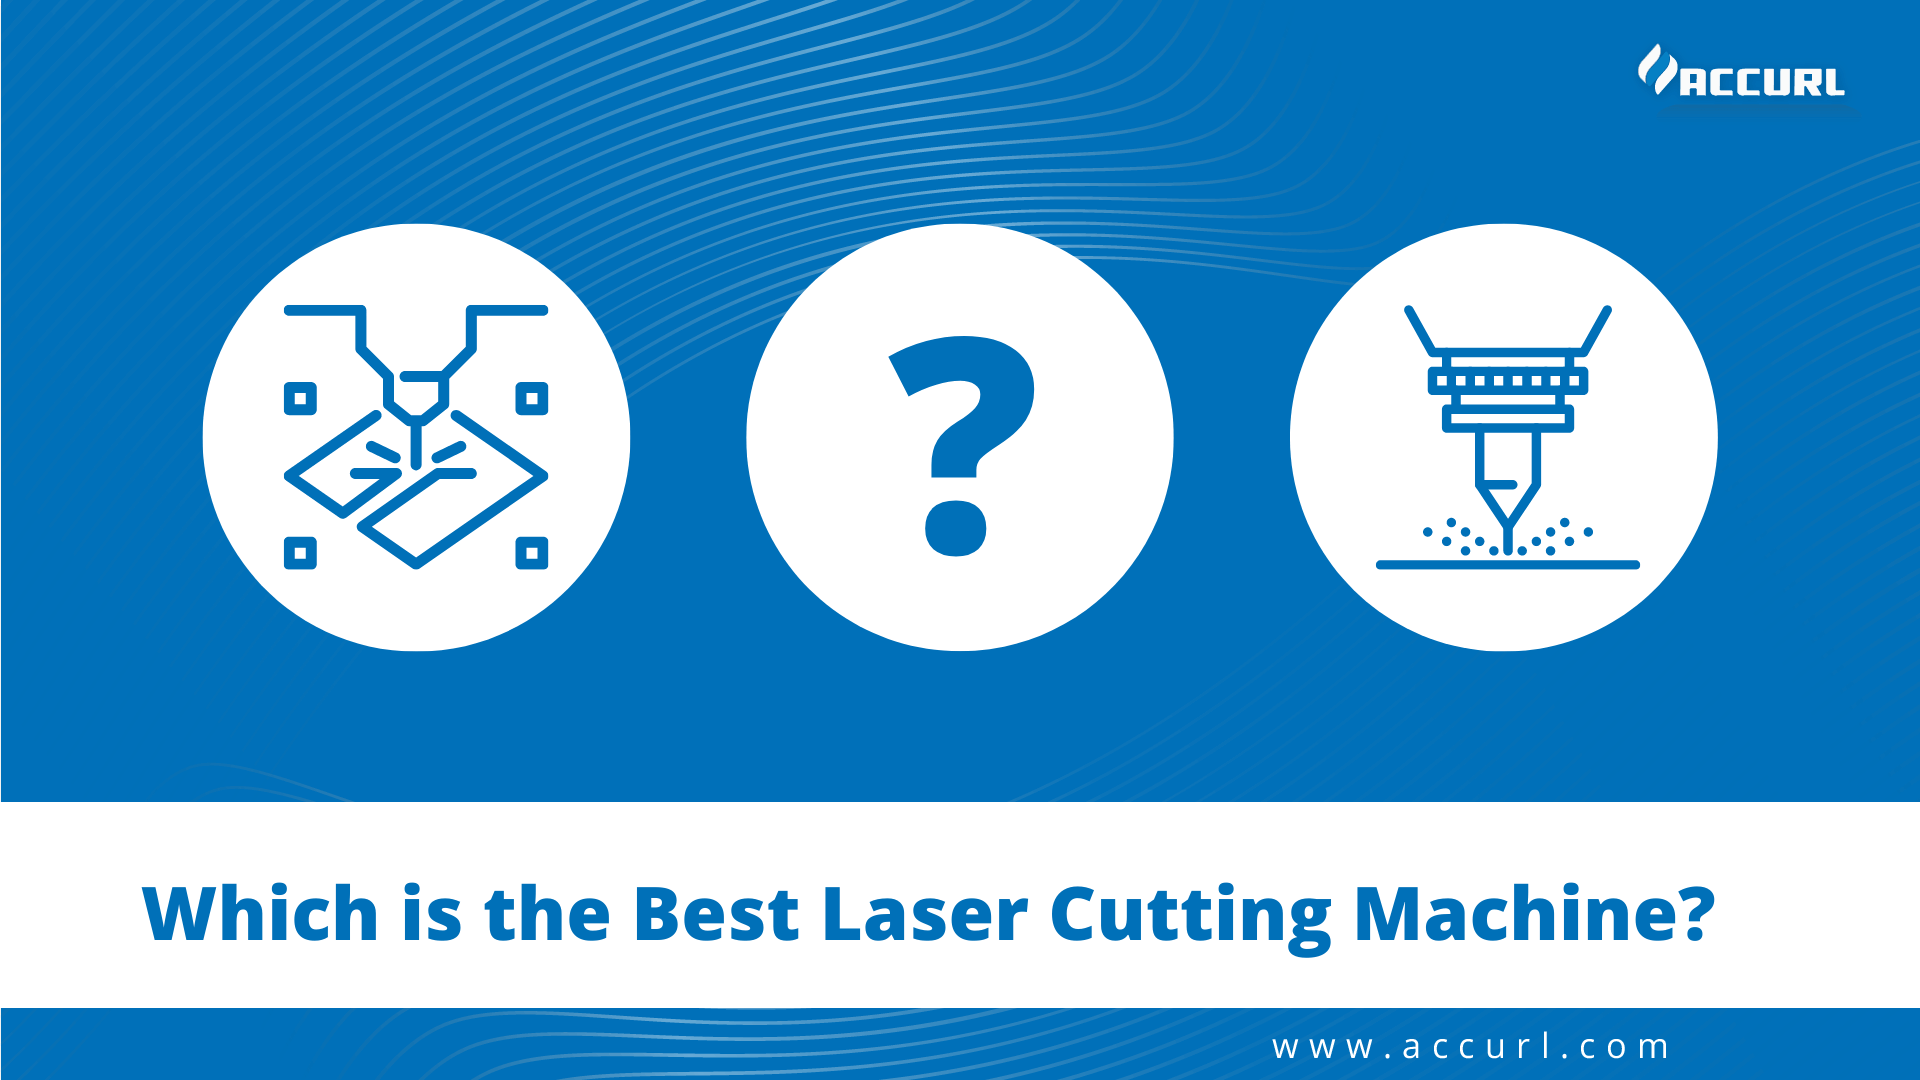 Which is the best laser cutting machine?